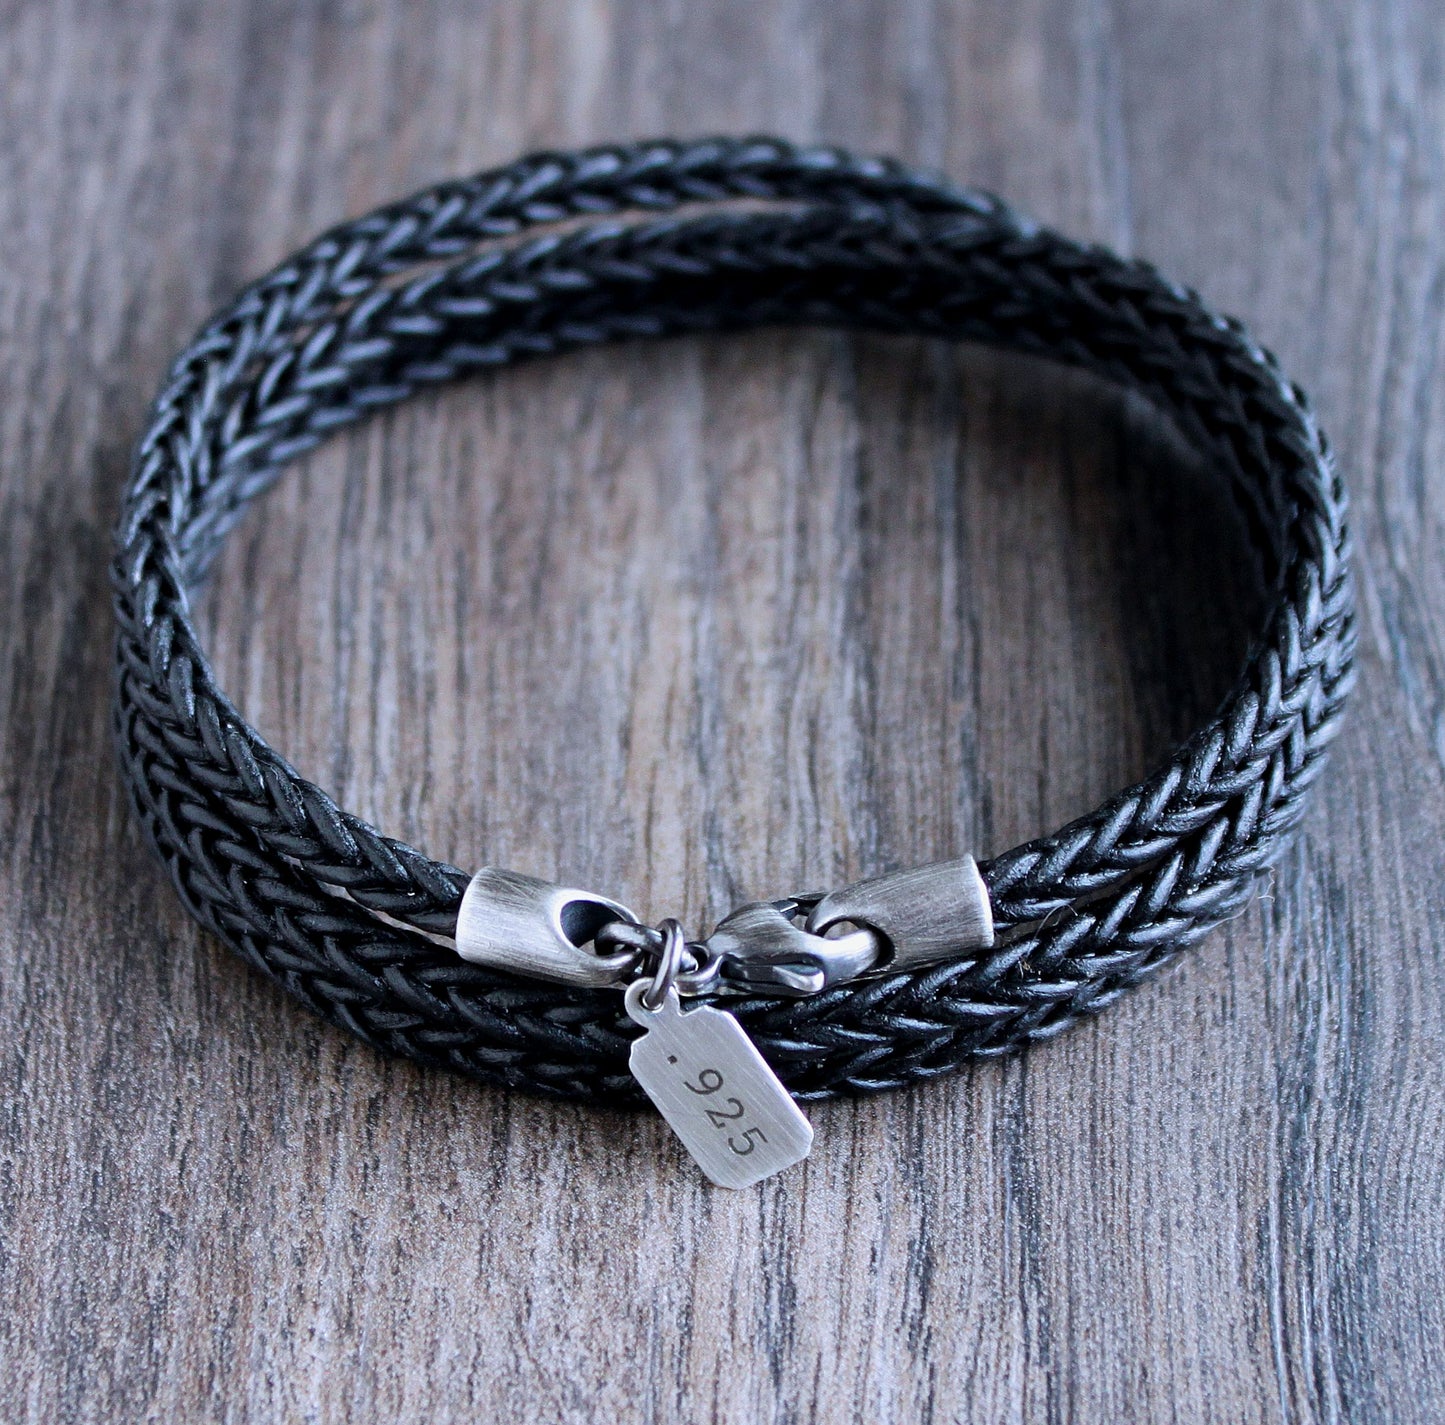 men's black leather braid wrap bracelet